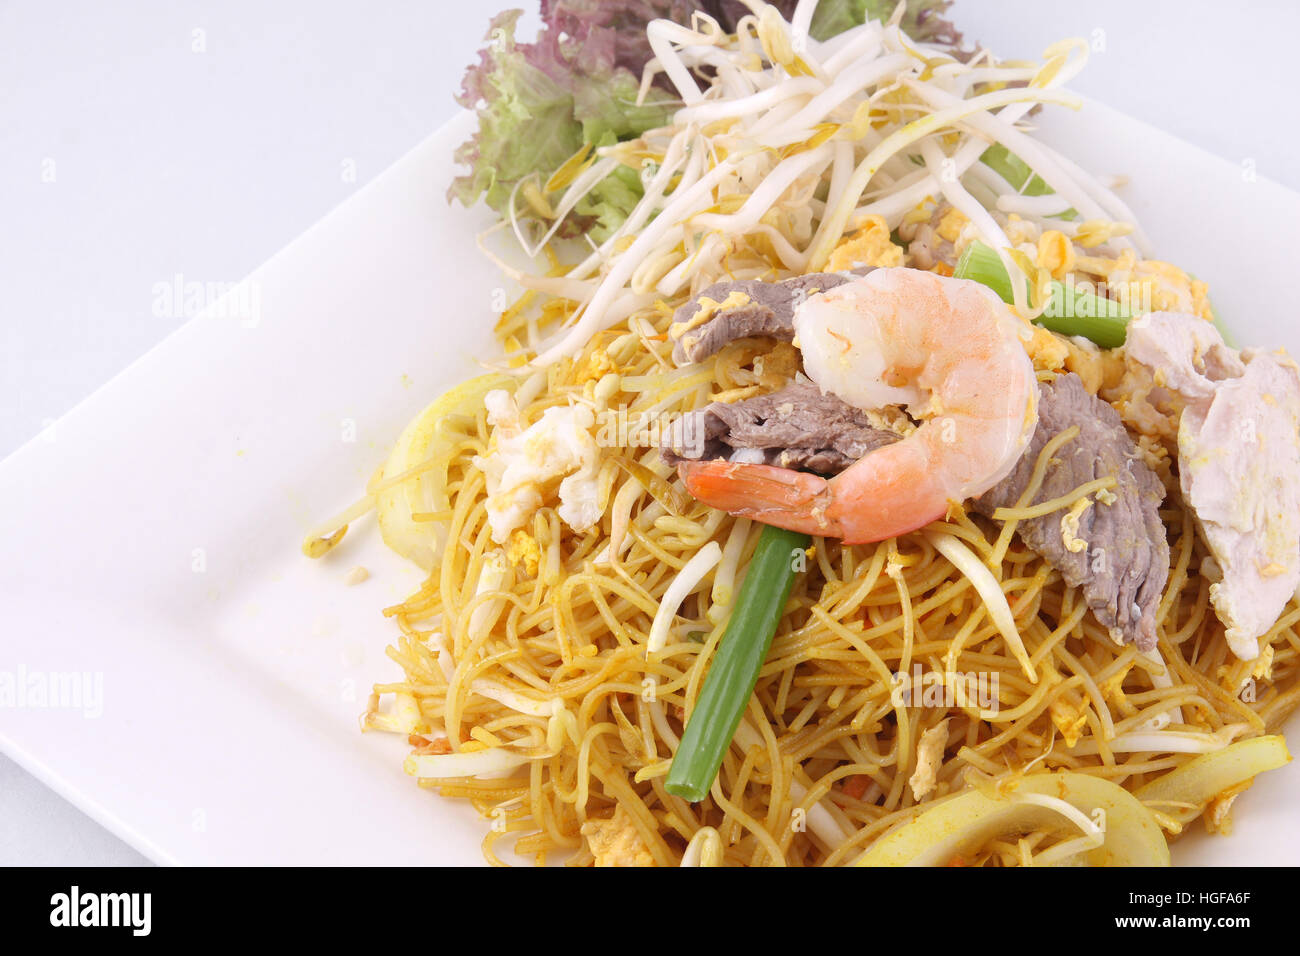 Singapore noodles stir fried Stock Photo